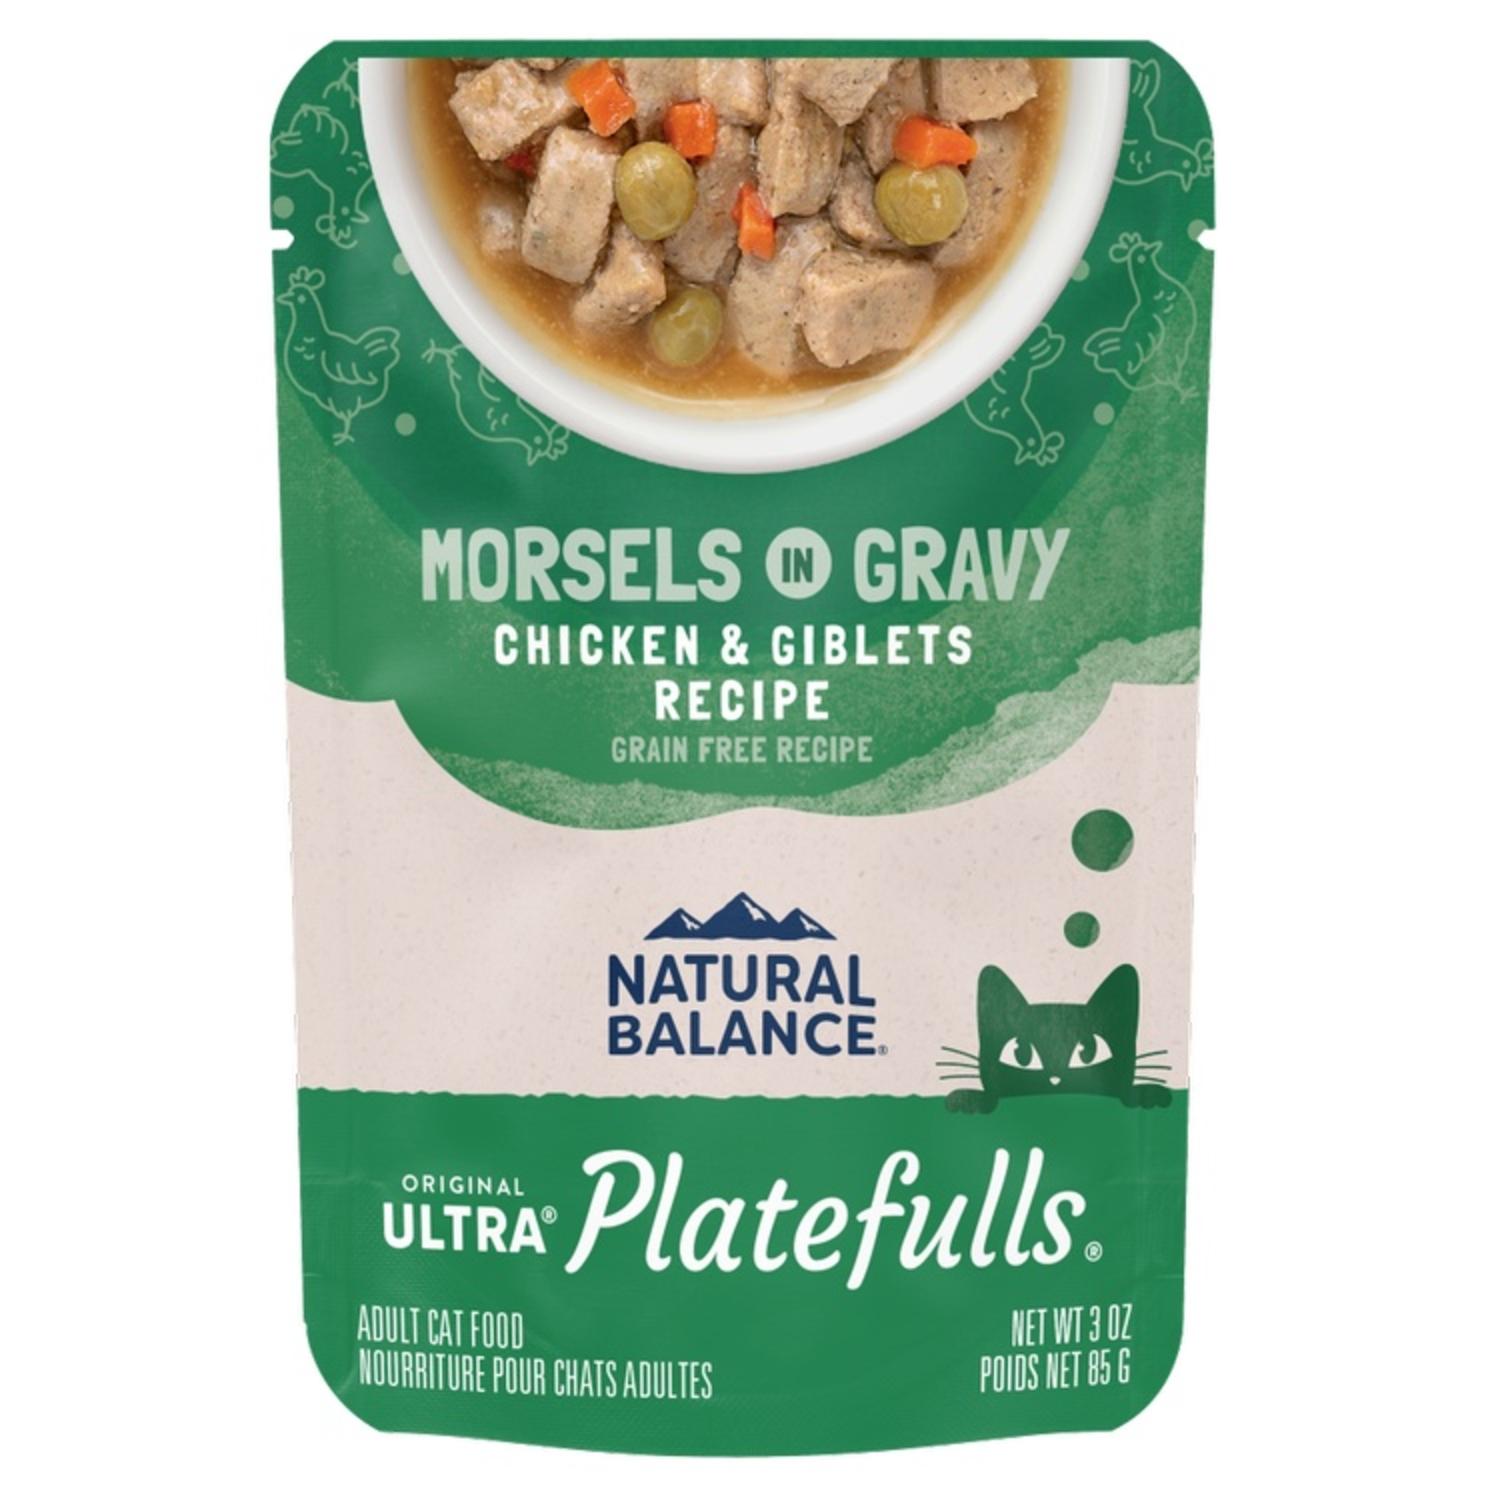 Natural Balance Platefulls® Chicken & Giblets Recipe Morsels in Gravy